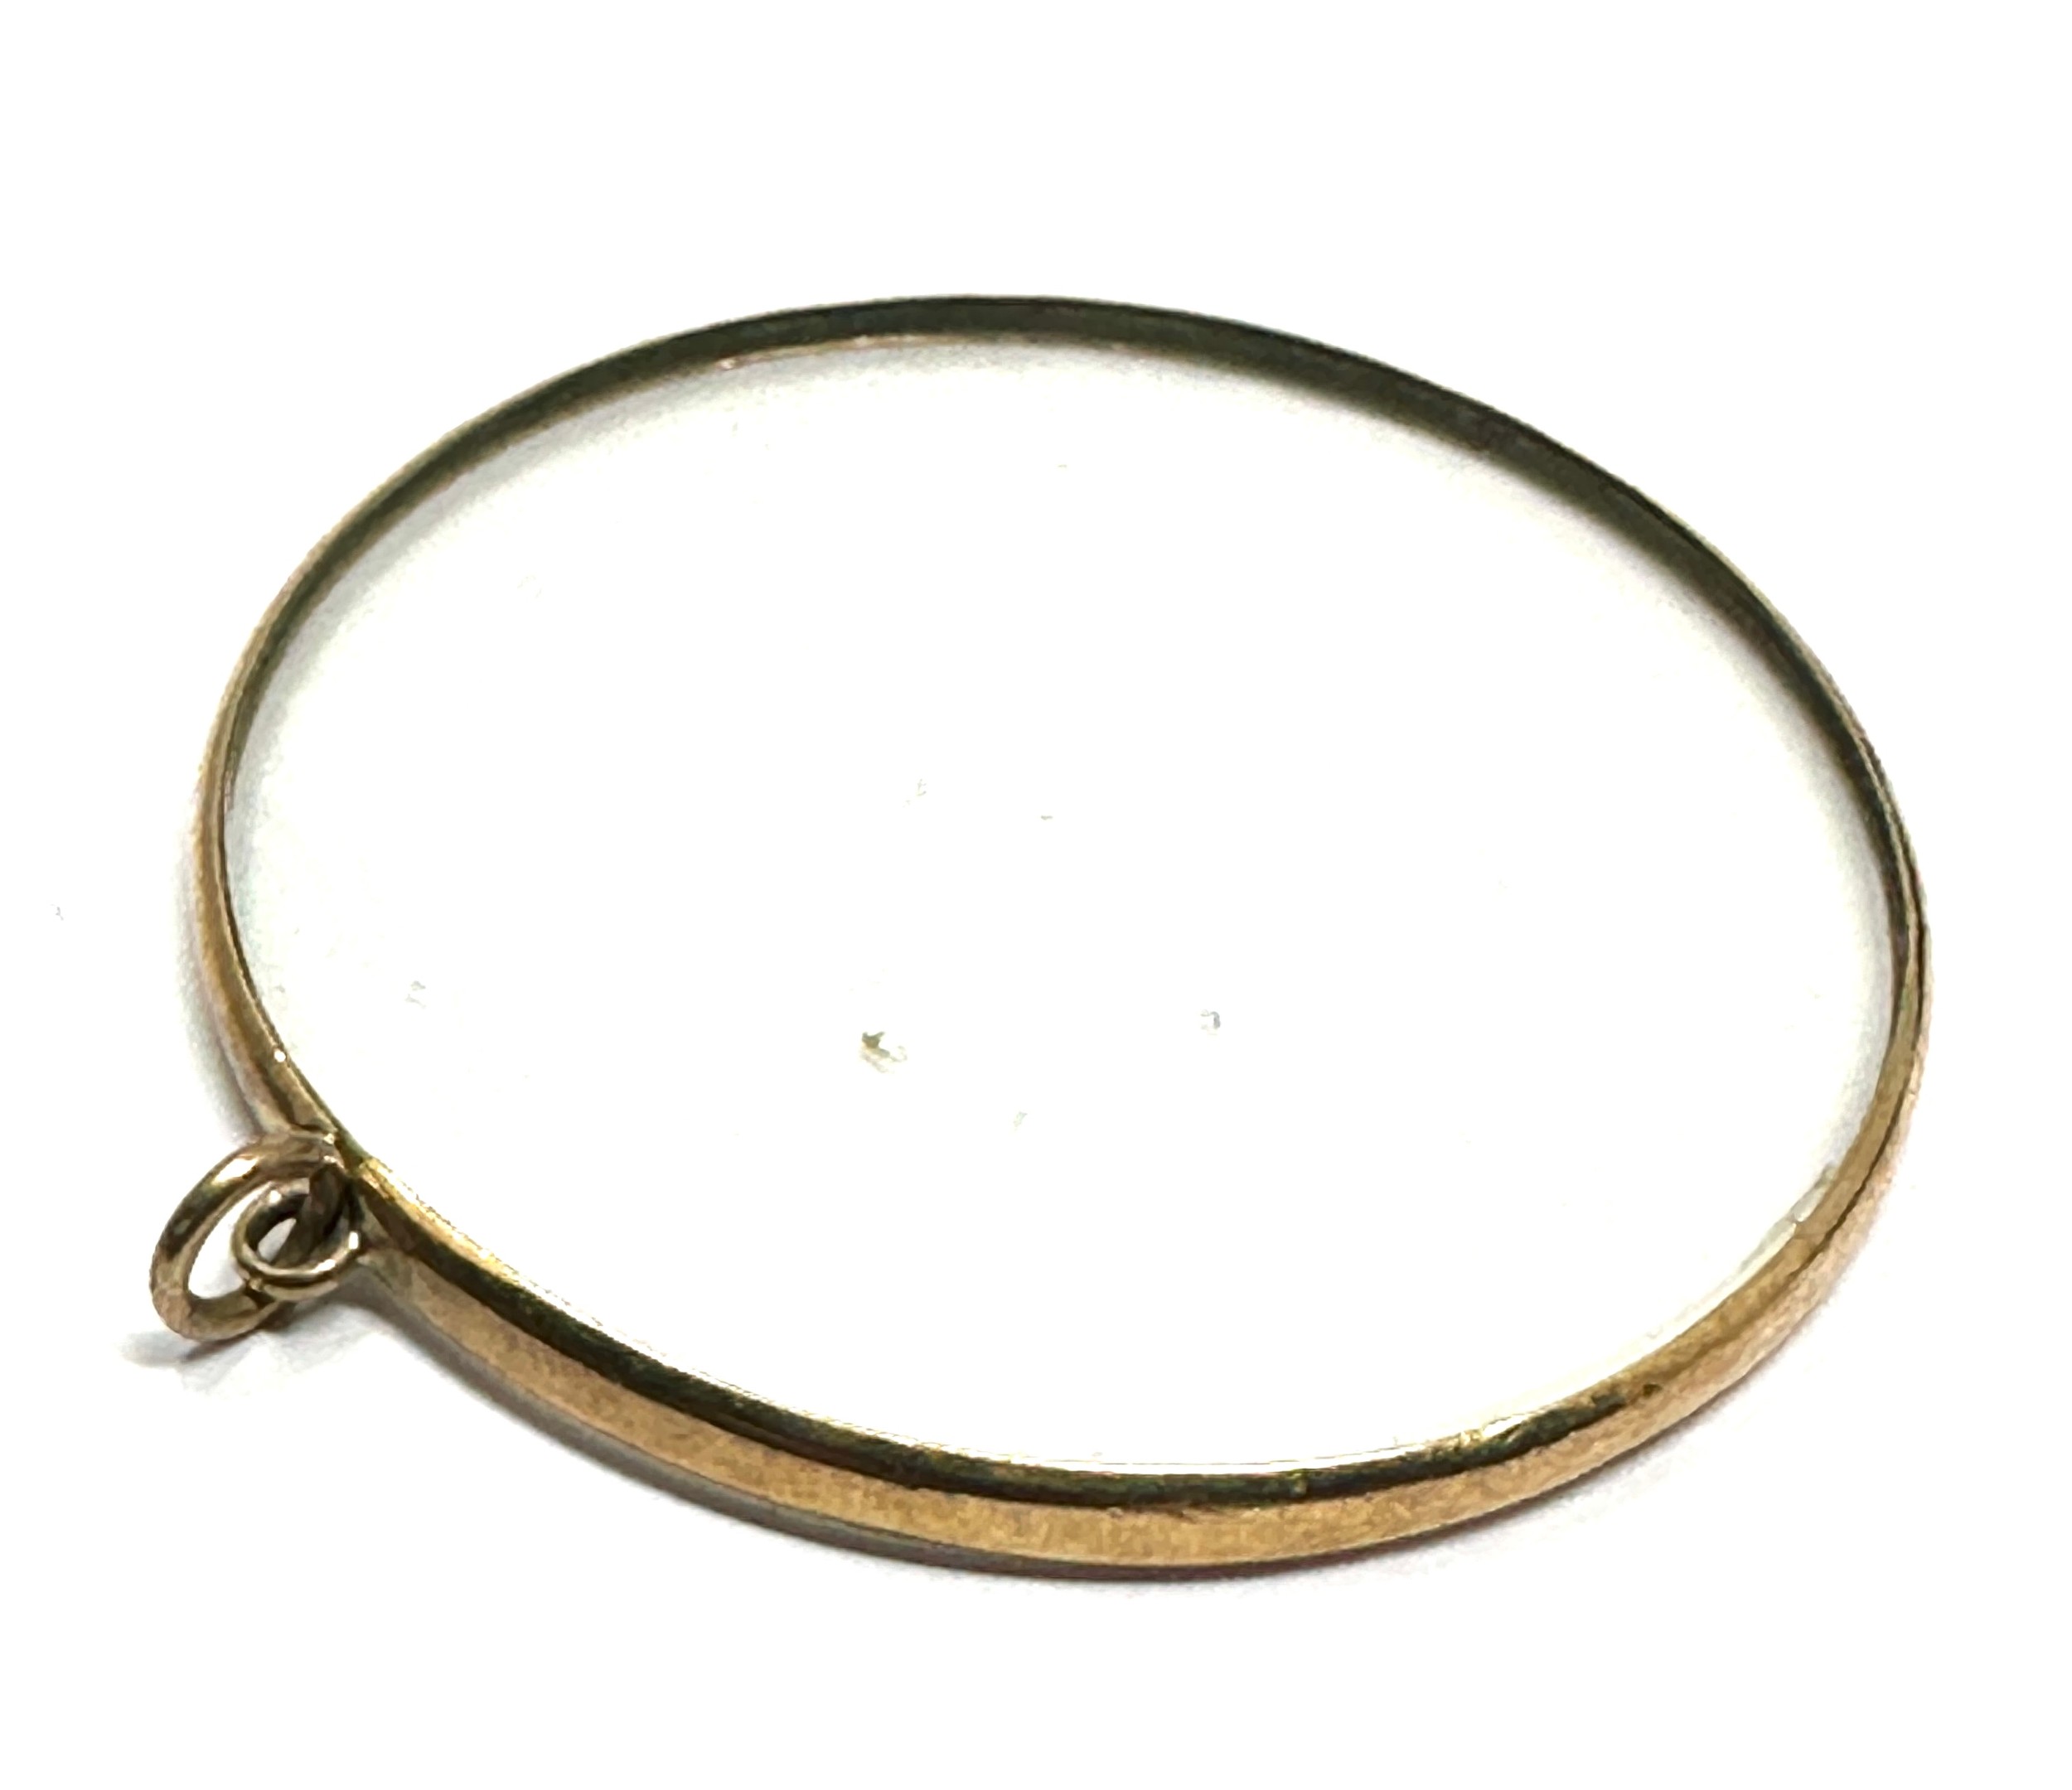 9ct gold round locket pendant (6.7g) - Image 2 of 2